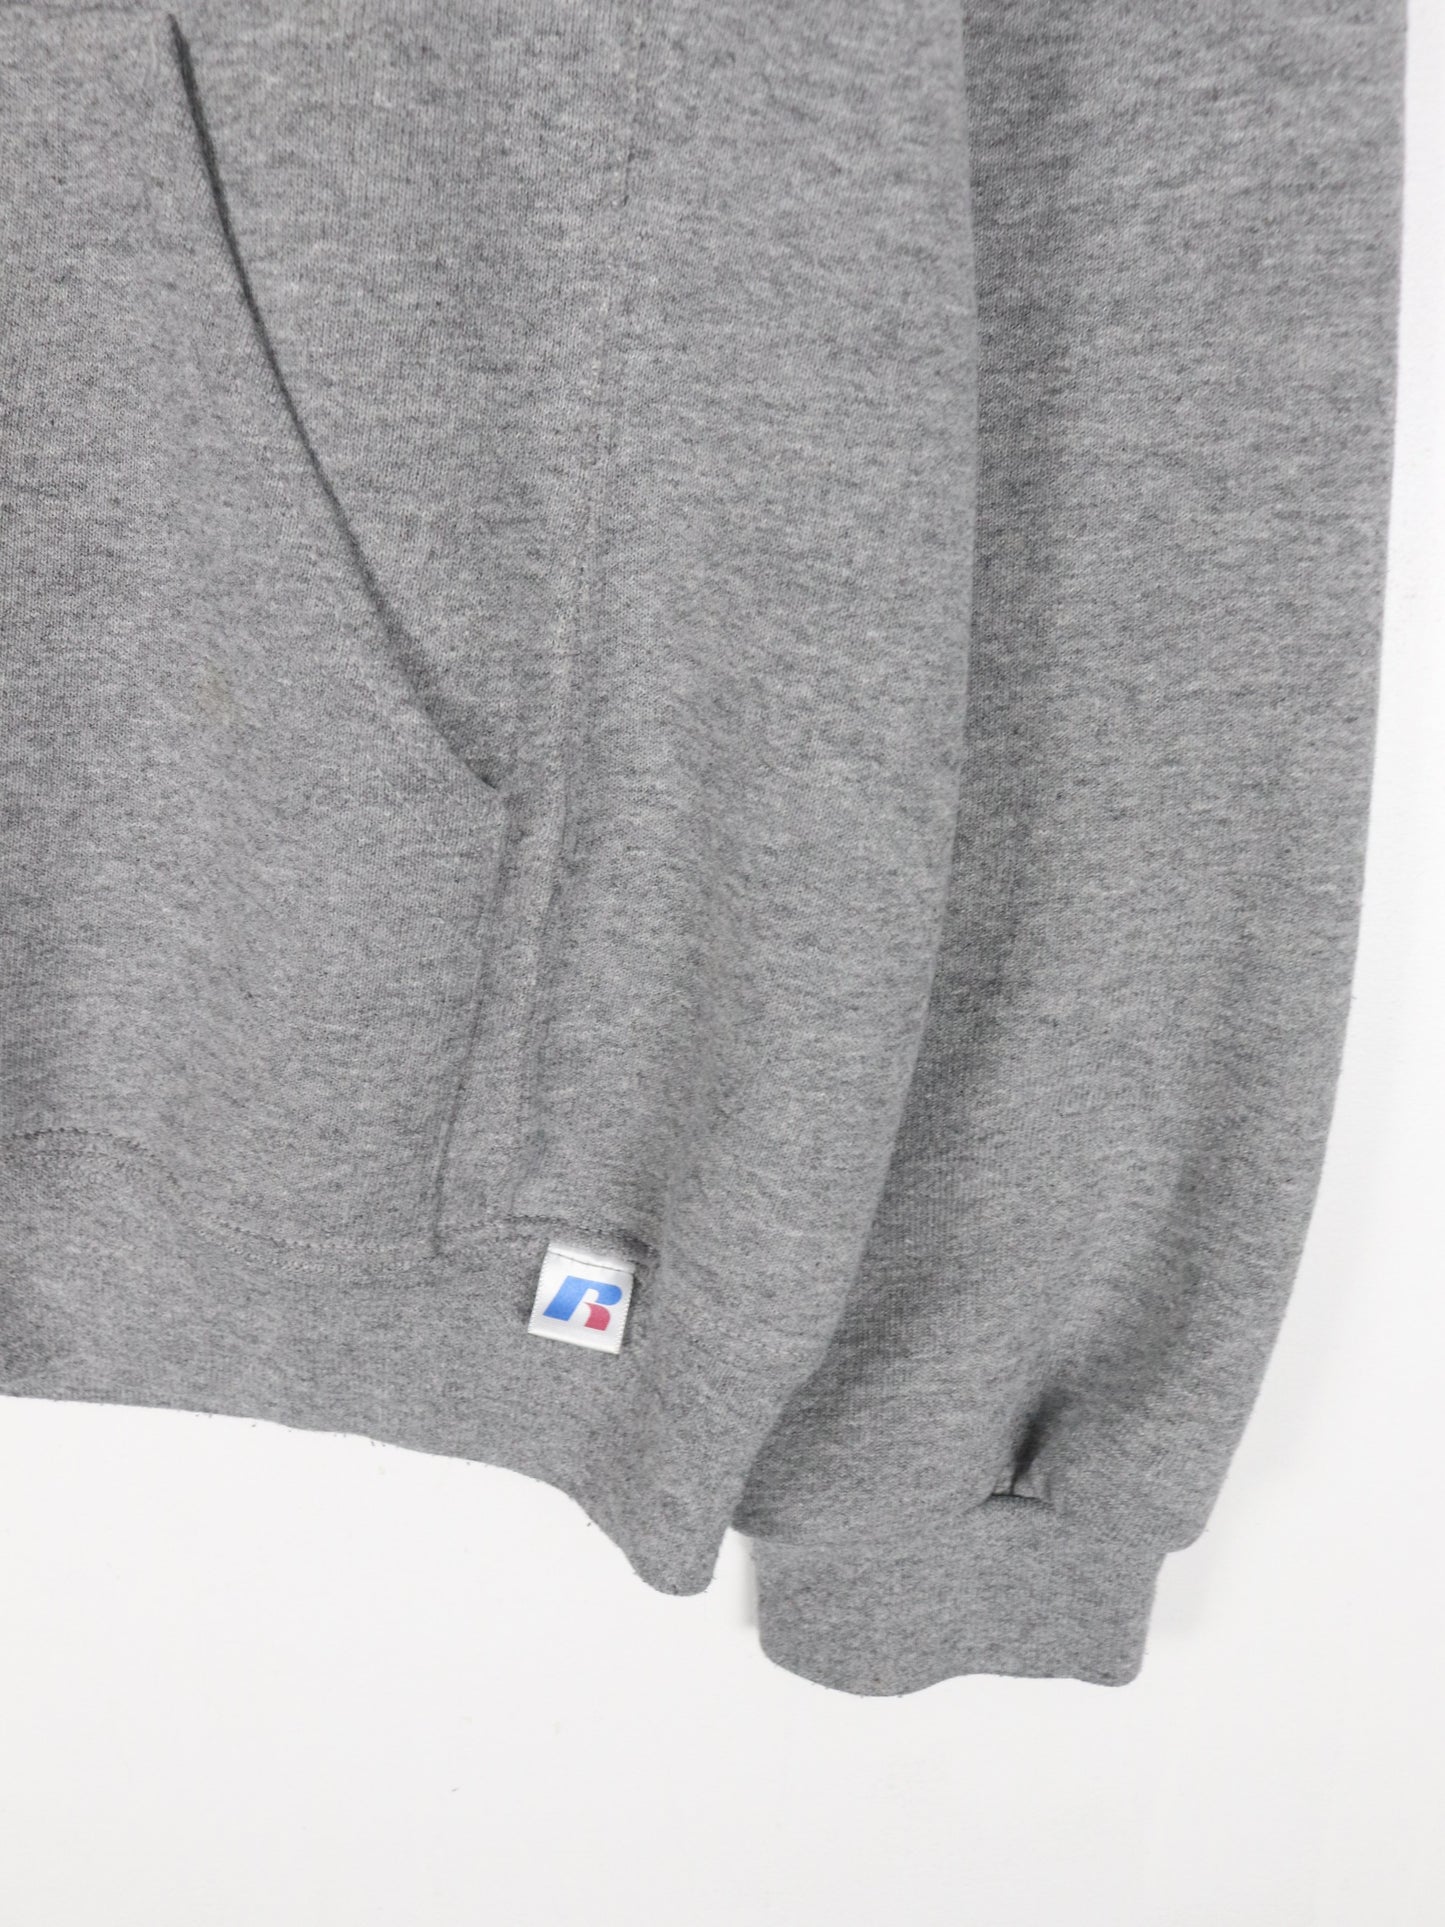 Humber College Sweatshirt Mens Small Grey Russell Athletic Hoodie